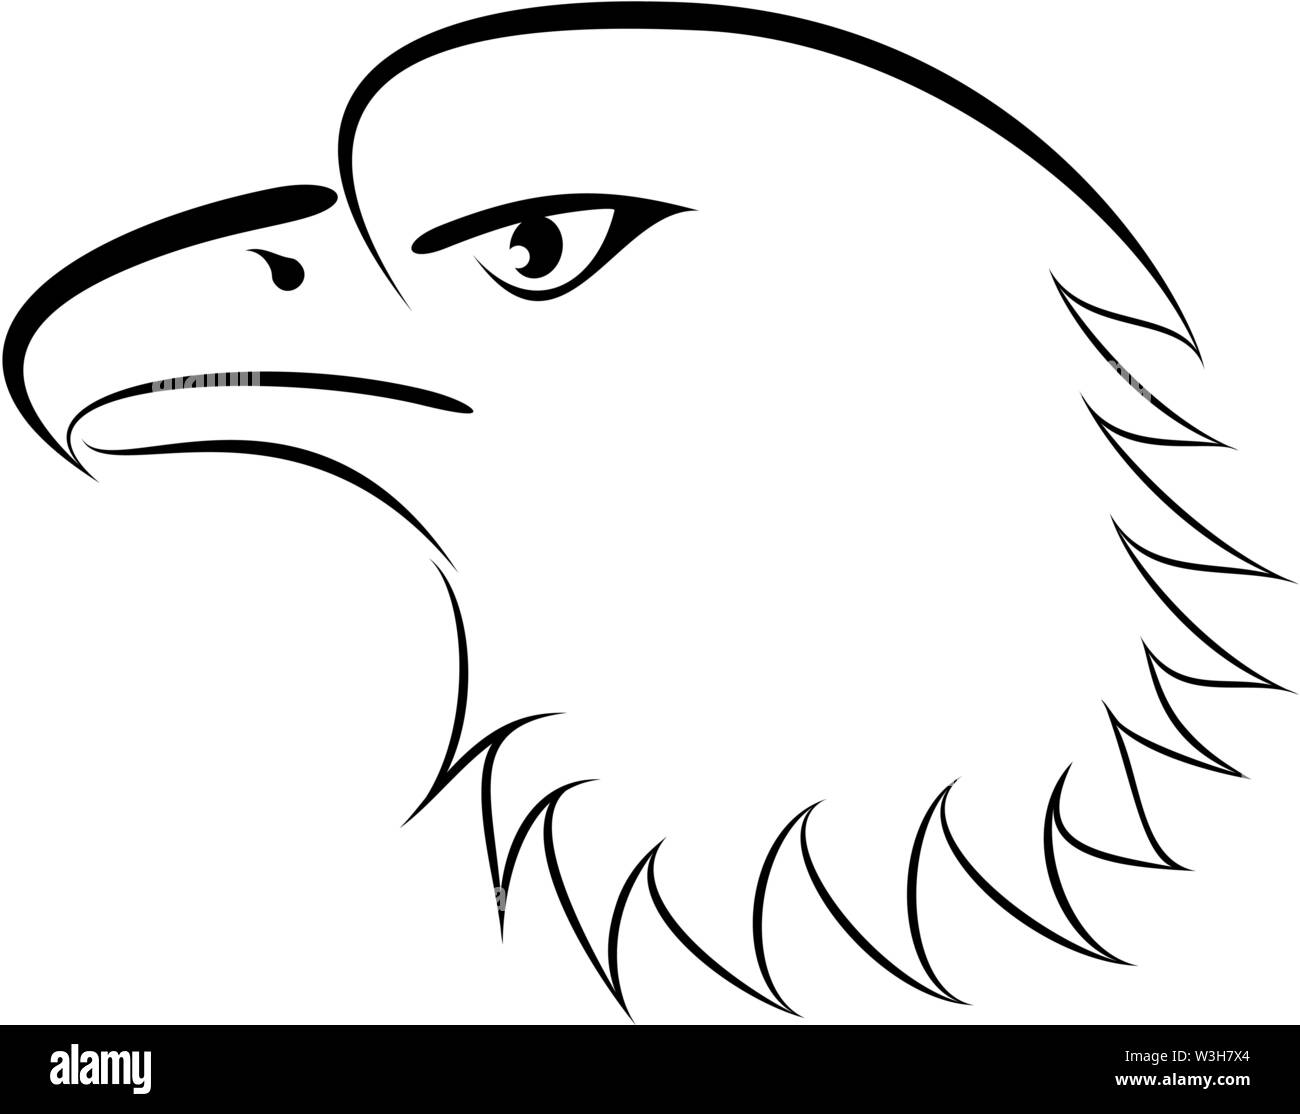 Linear drawing bald eagle genre minimalism Stock Vector